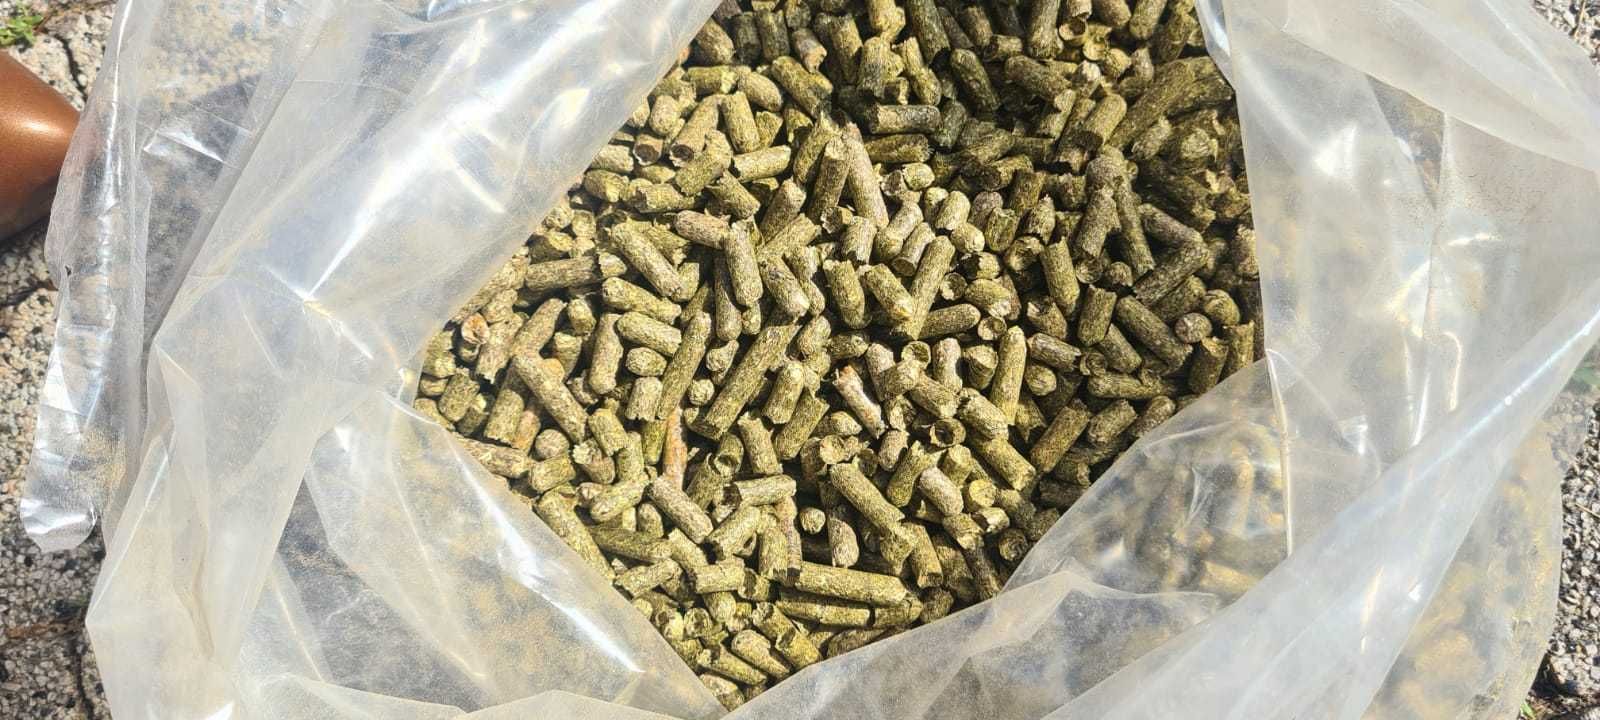 Siano granulowane - Trawokulki - pellet z siana dla koni PRODUCENT